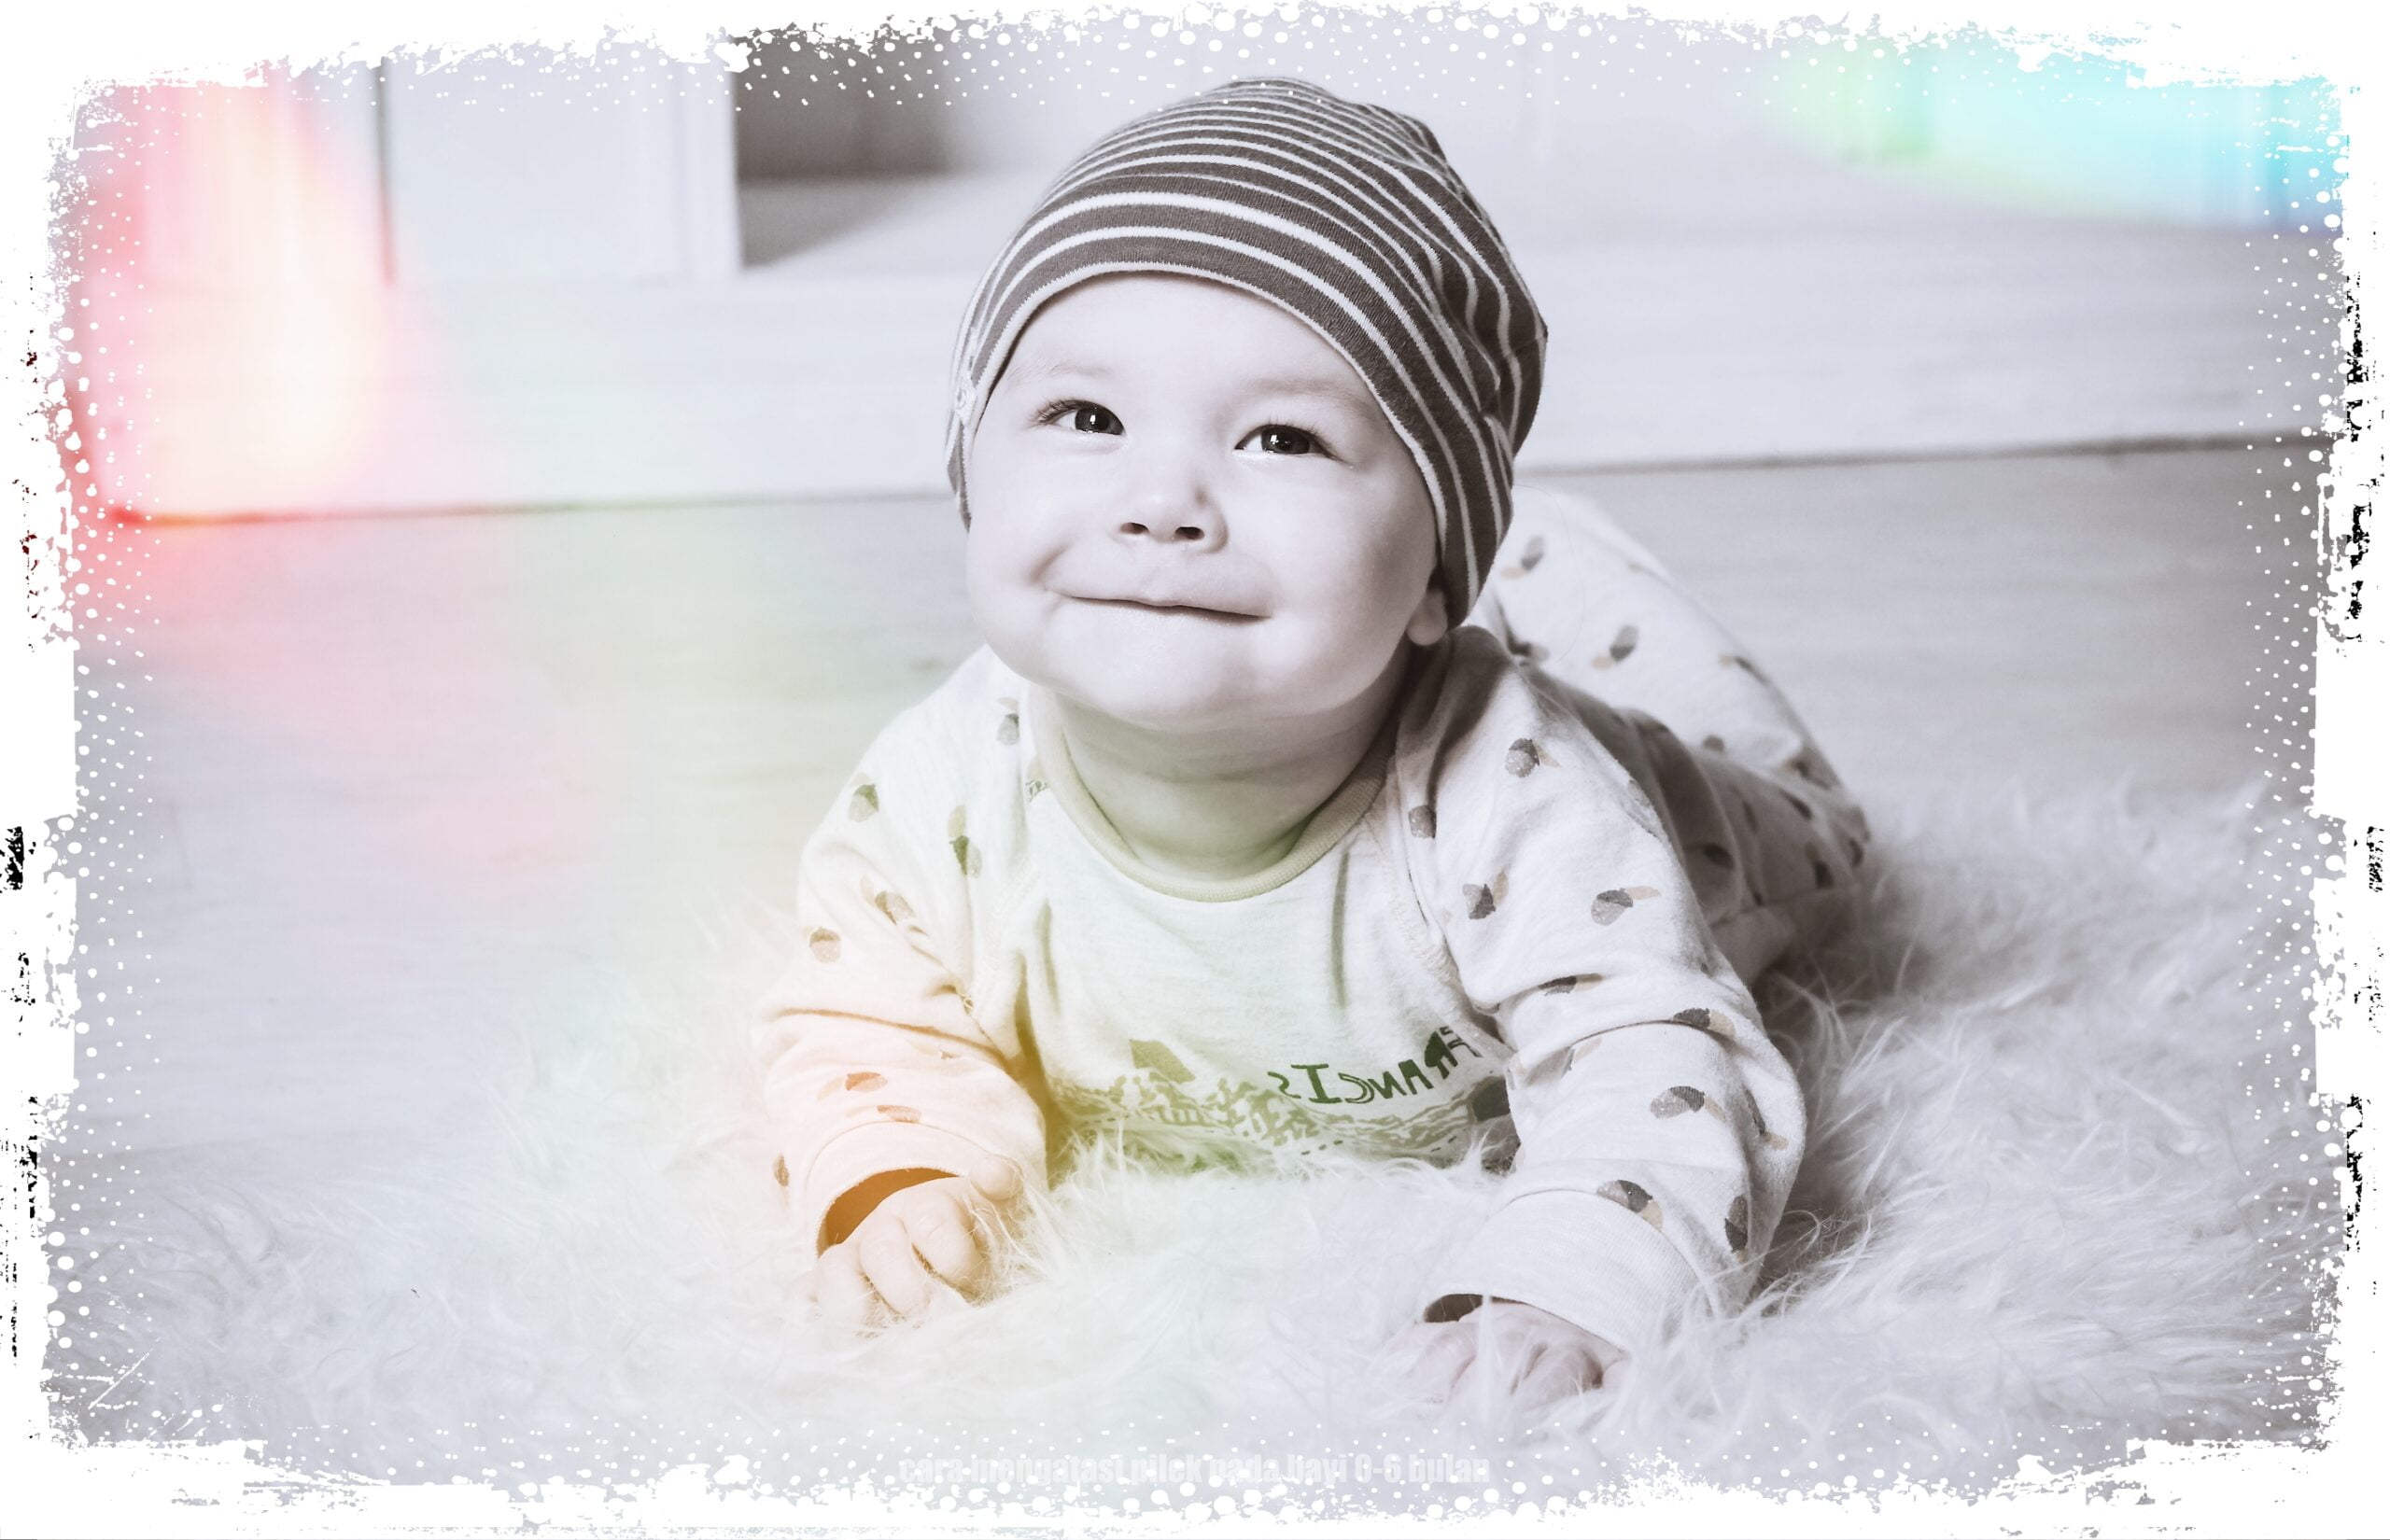 cara mengatasi pilek pada bayi 0-6 bulan image